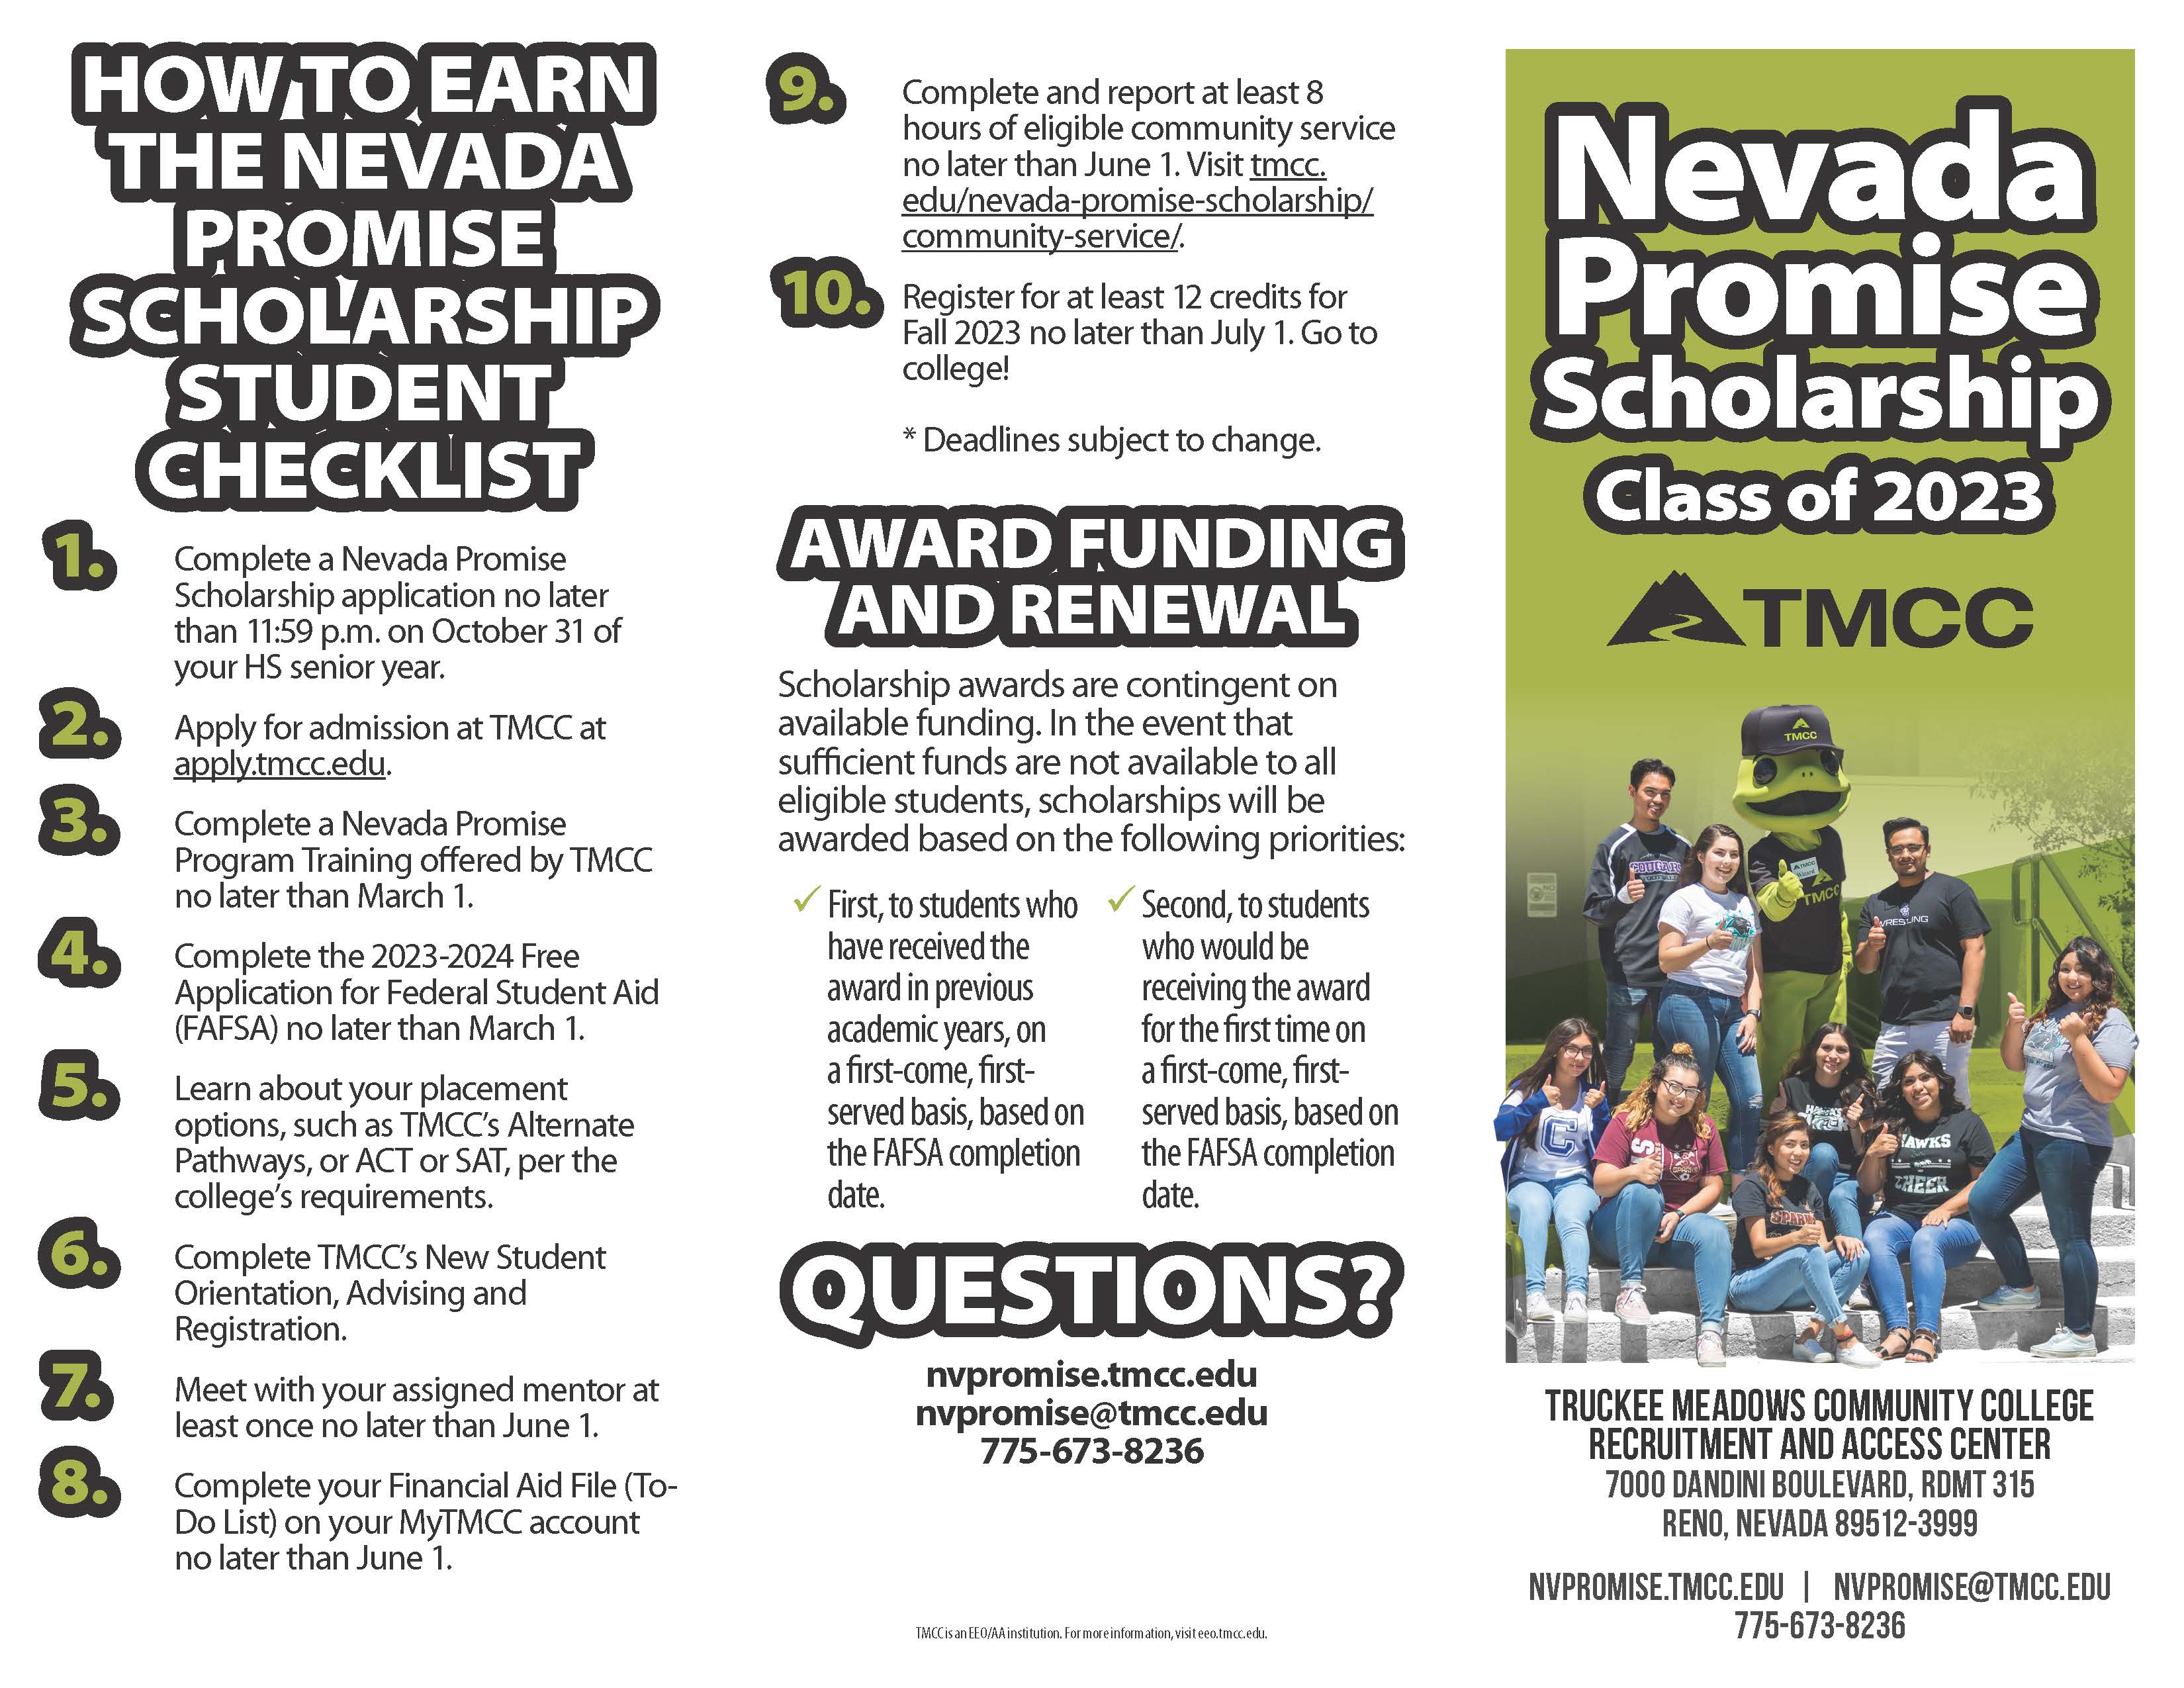 Nevada Promise Scholarship